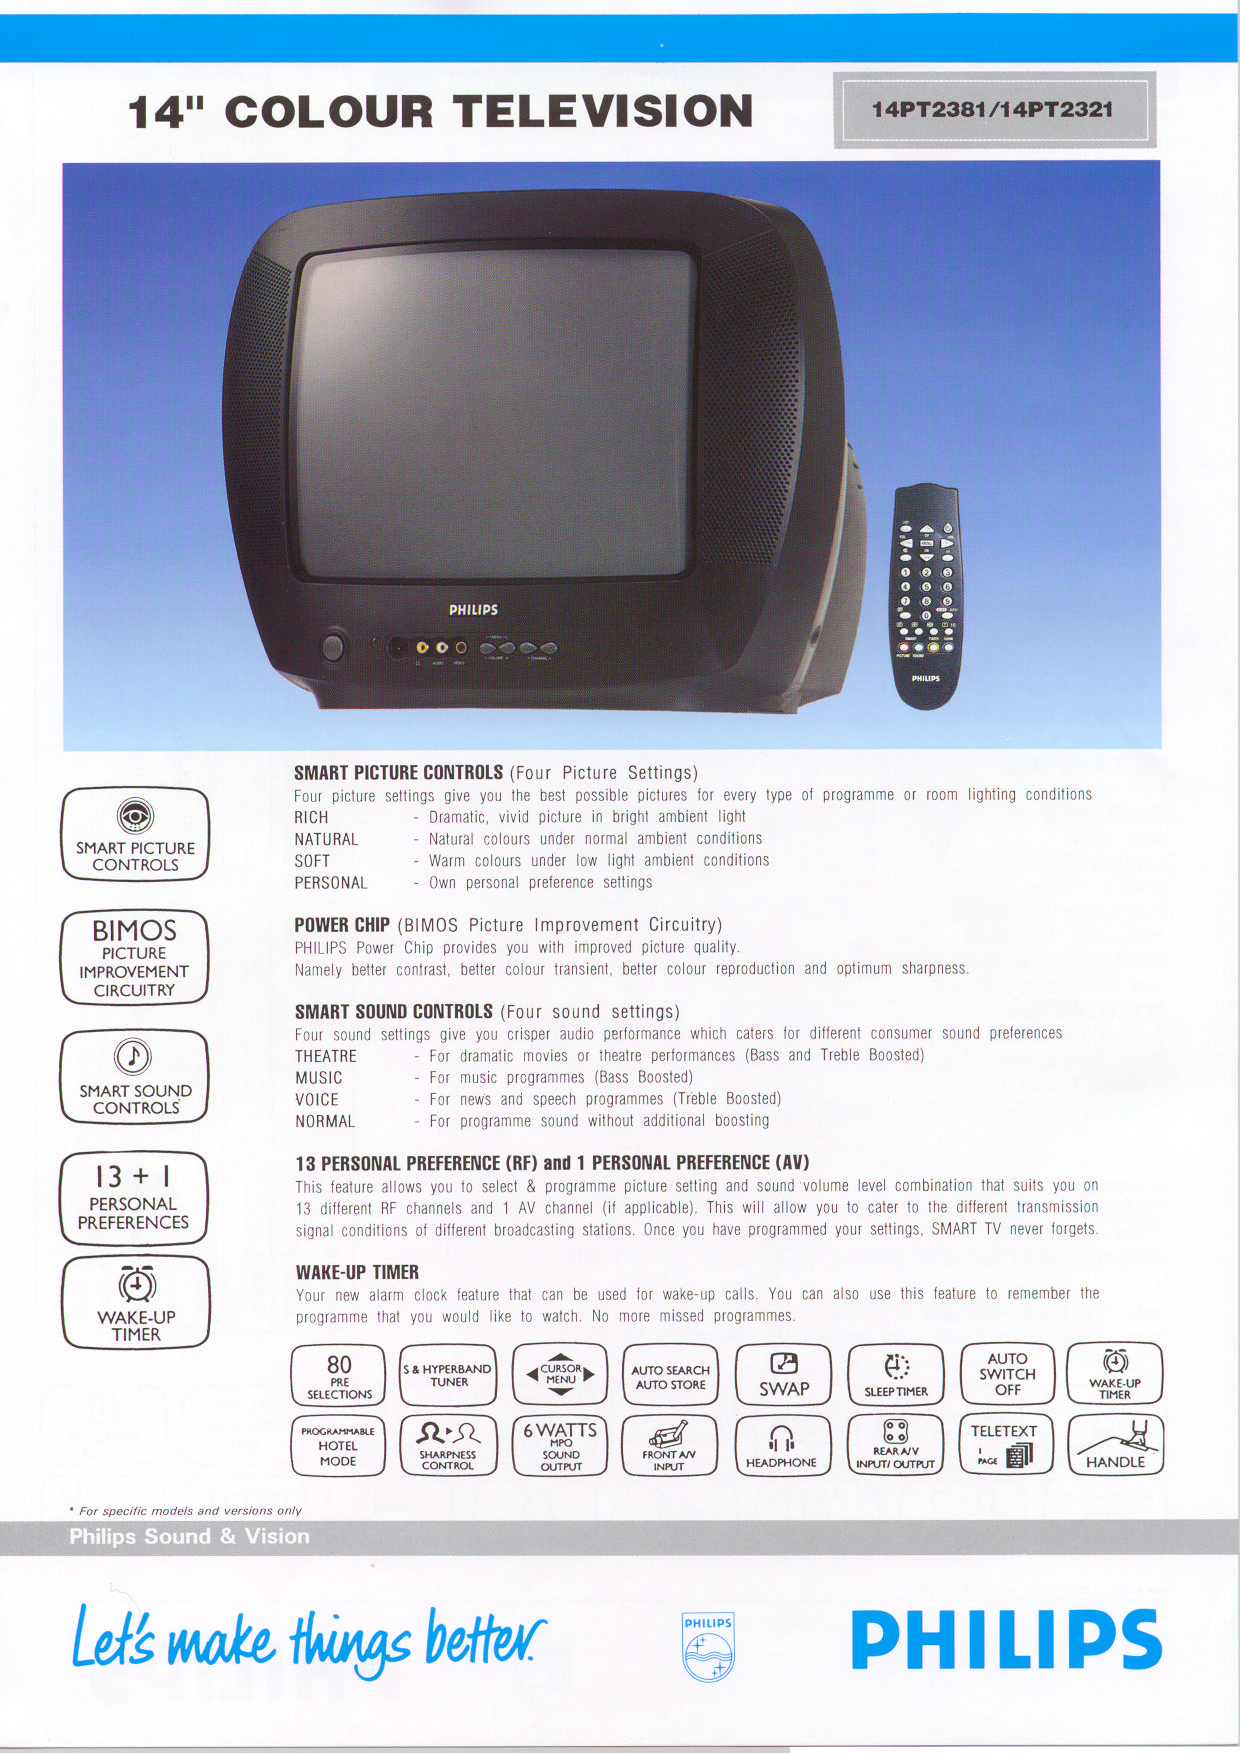 Philips 14PT2381 User Manual